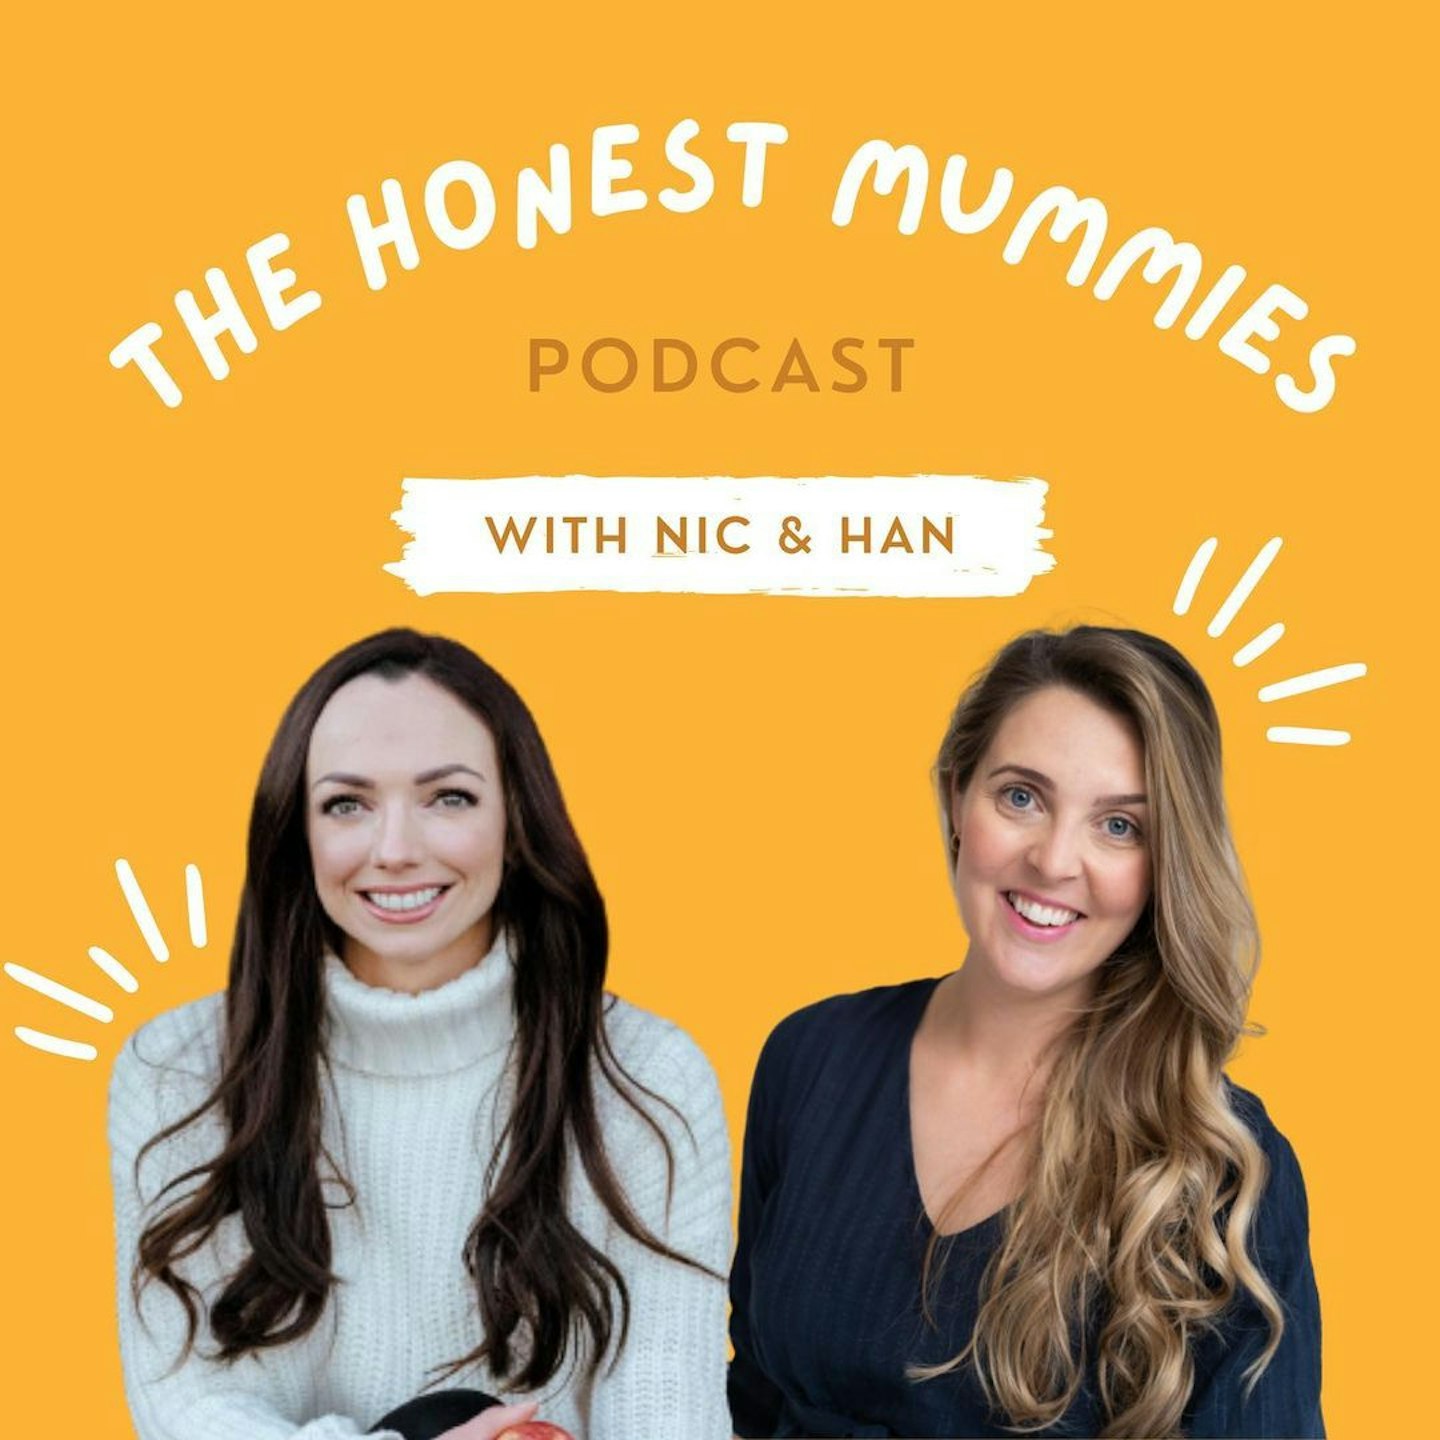 hannahmummymills-podcast